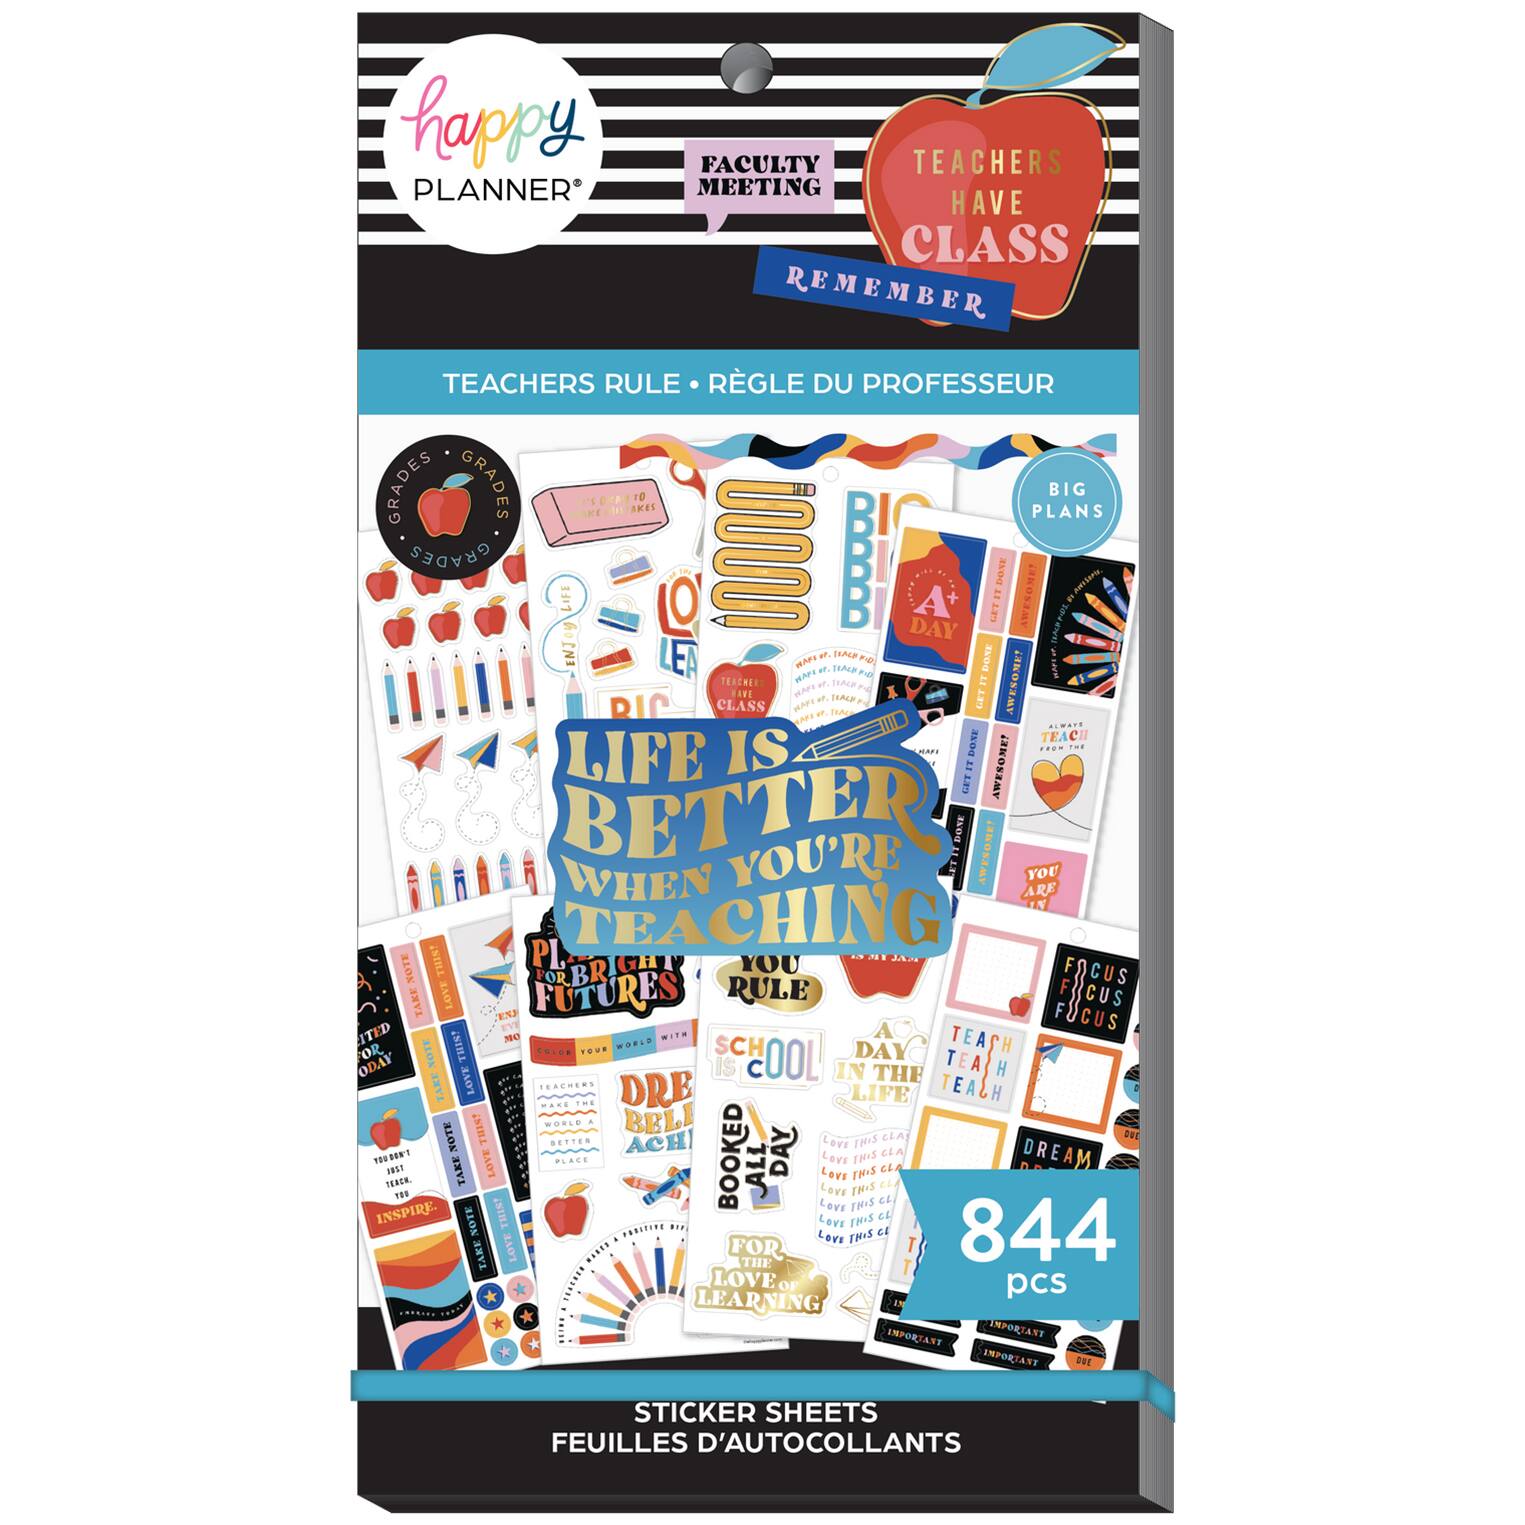 Details about   New The Happy Planner TEACHER Sticker Book 